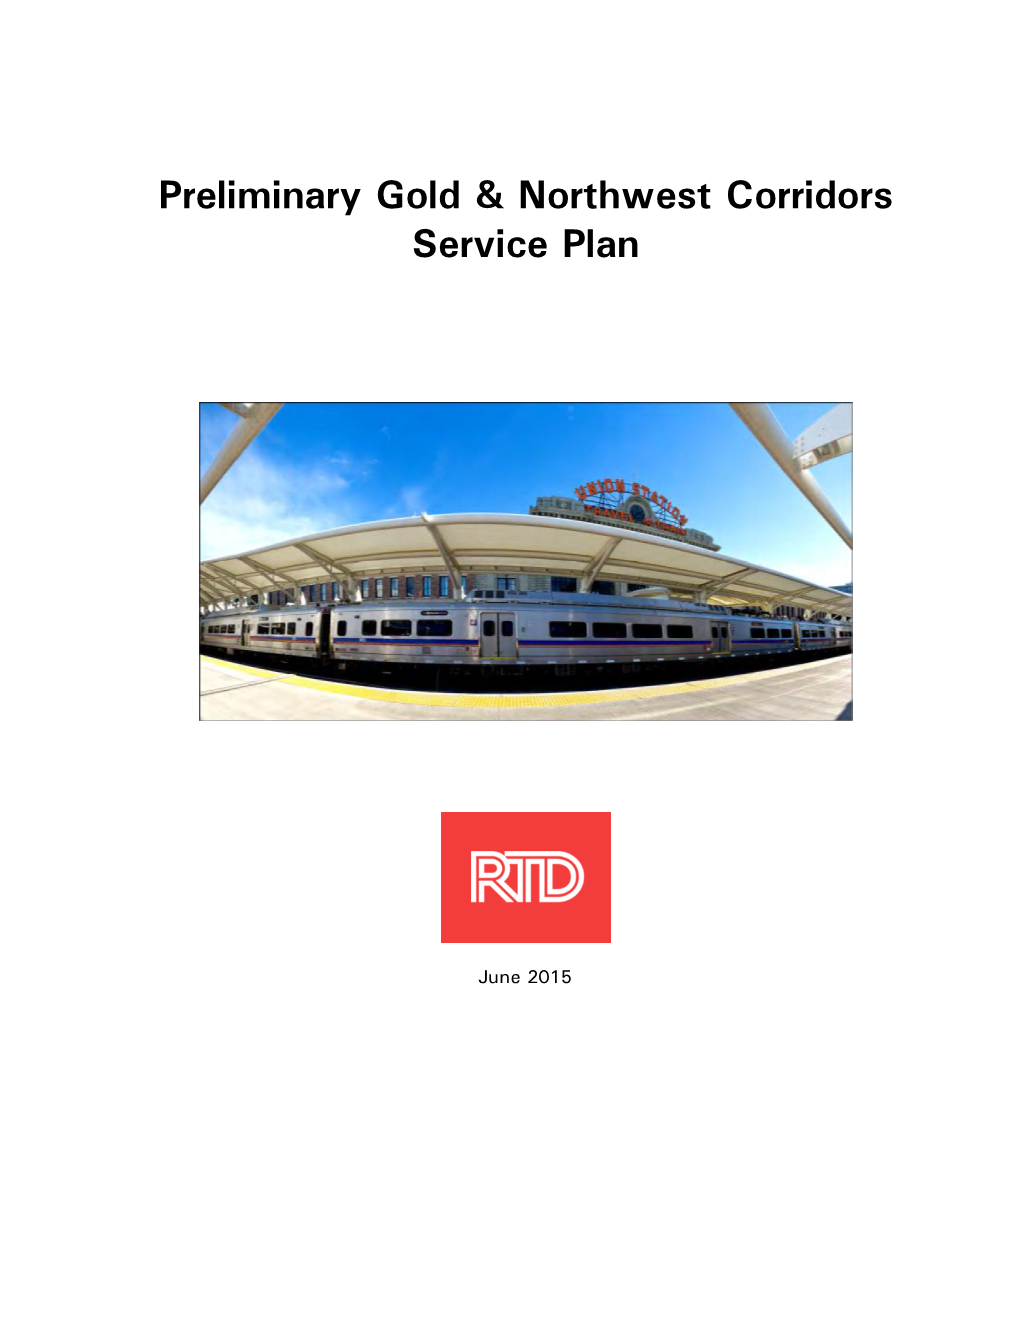 Preliminary Gold & Northwest Corridors Service Plan